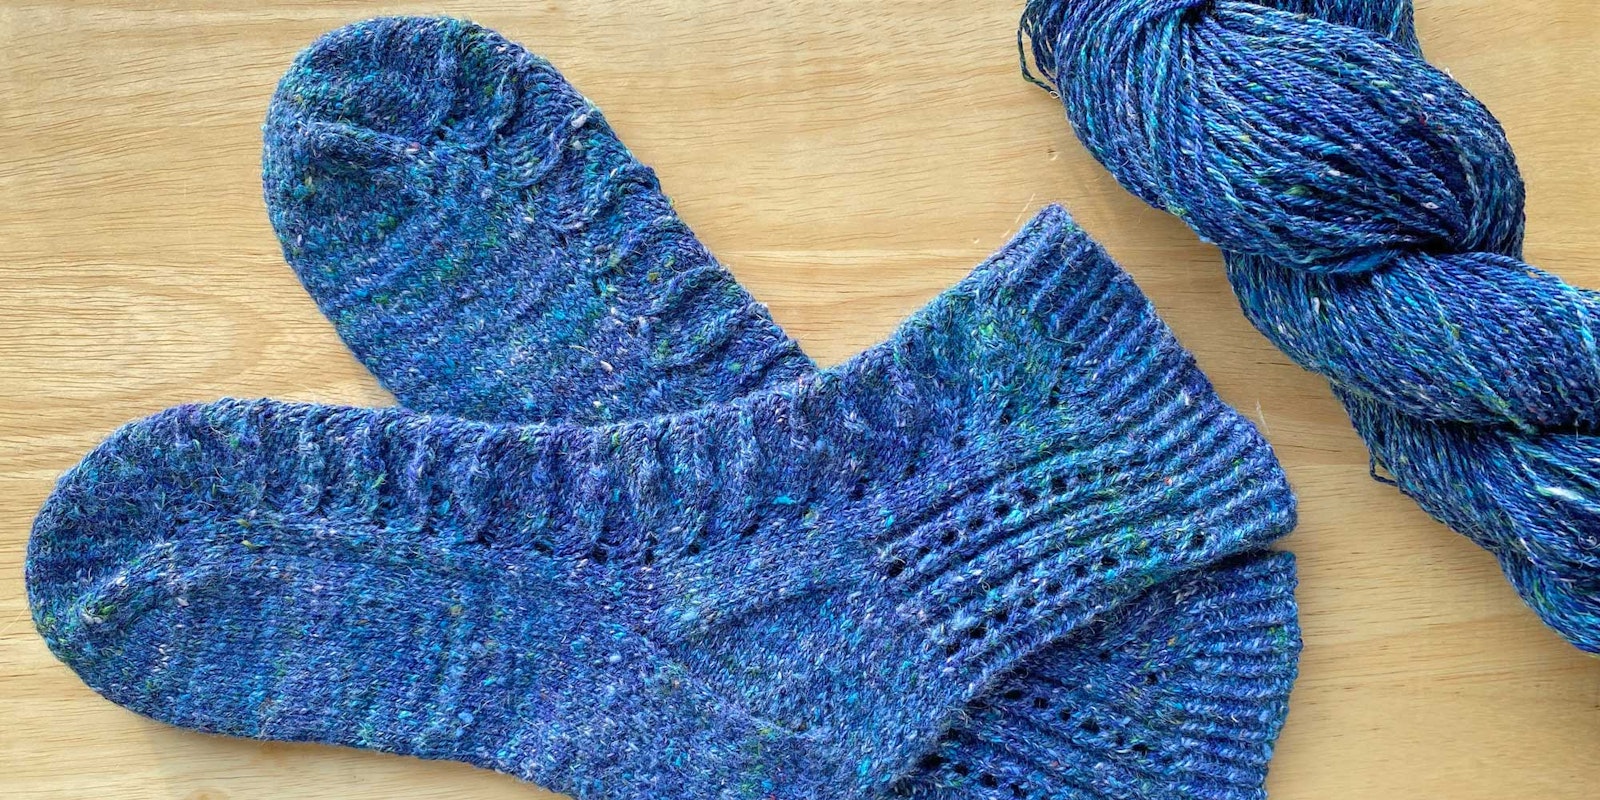 Plying Spindle Spun Yarn - knittyBlog